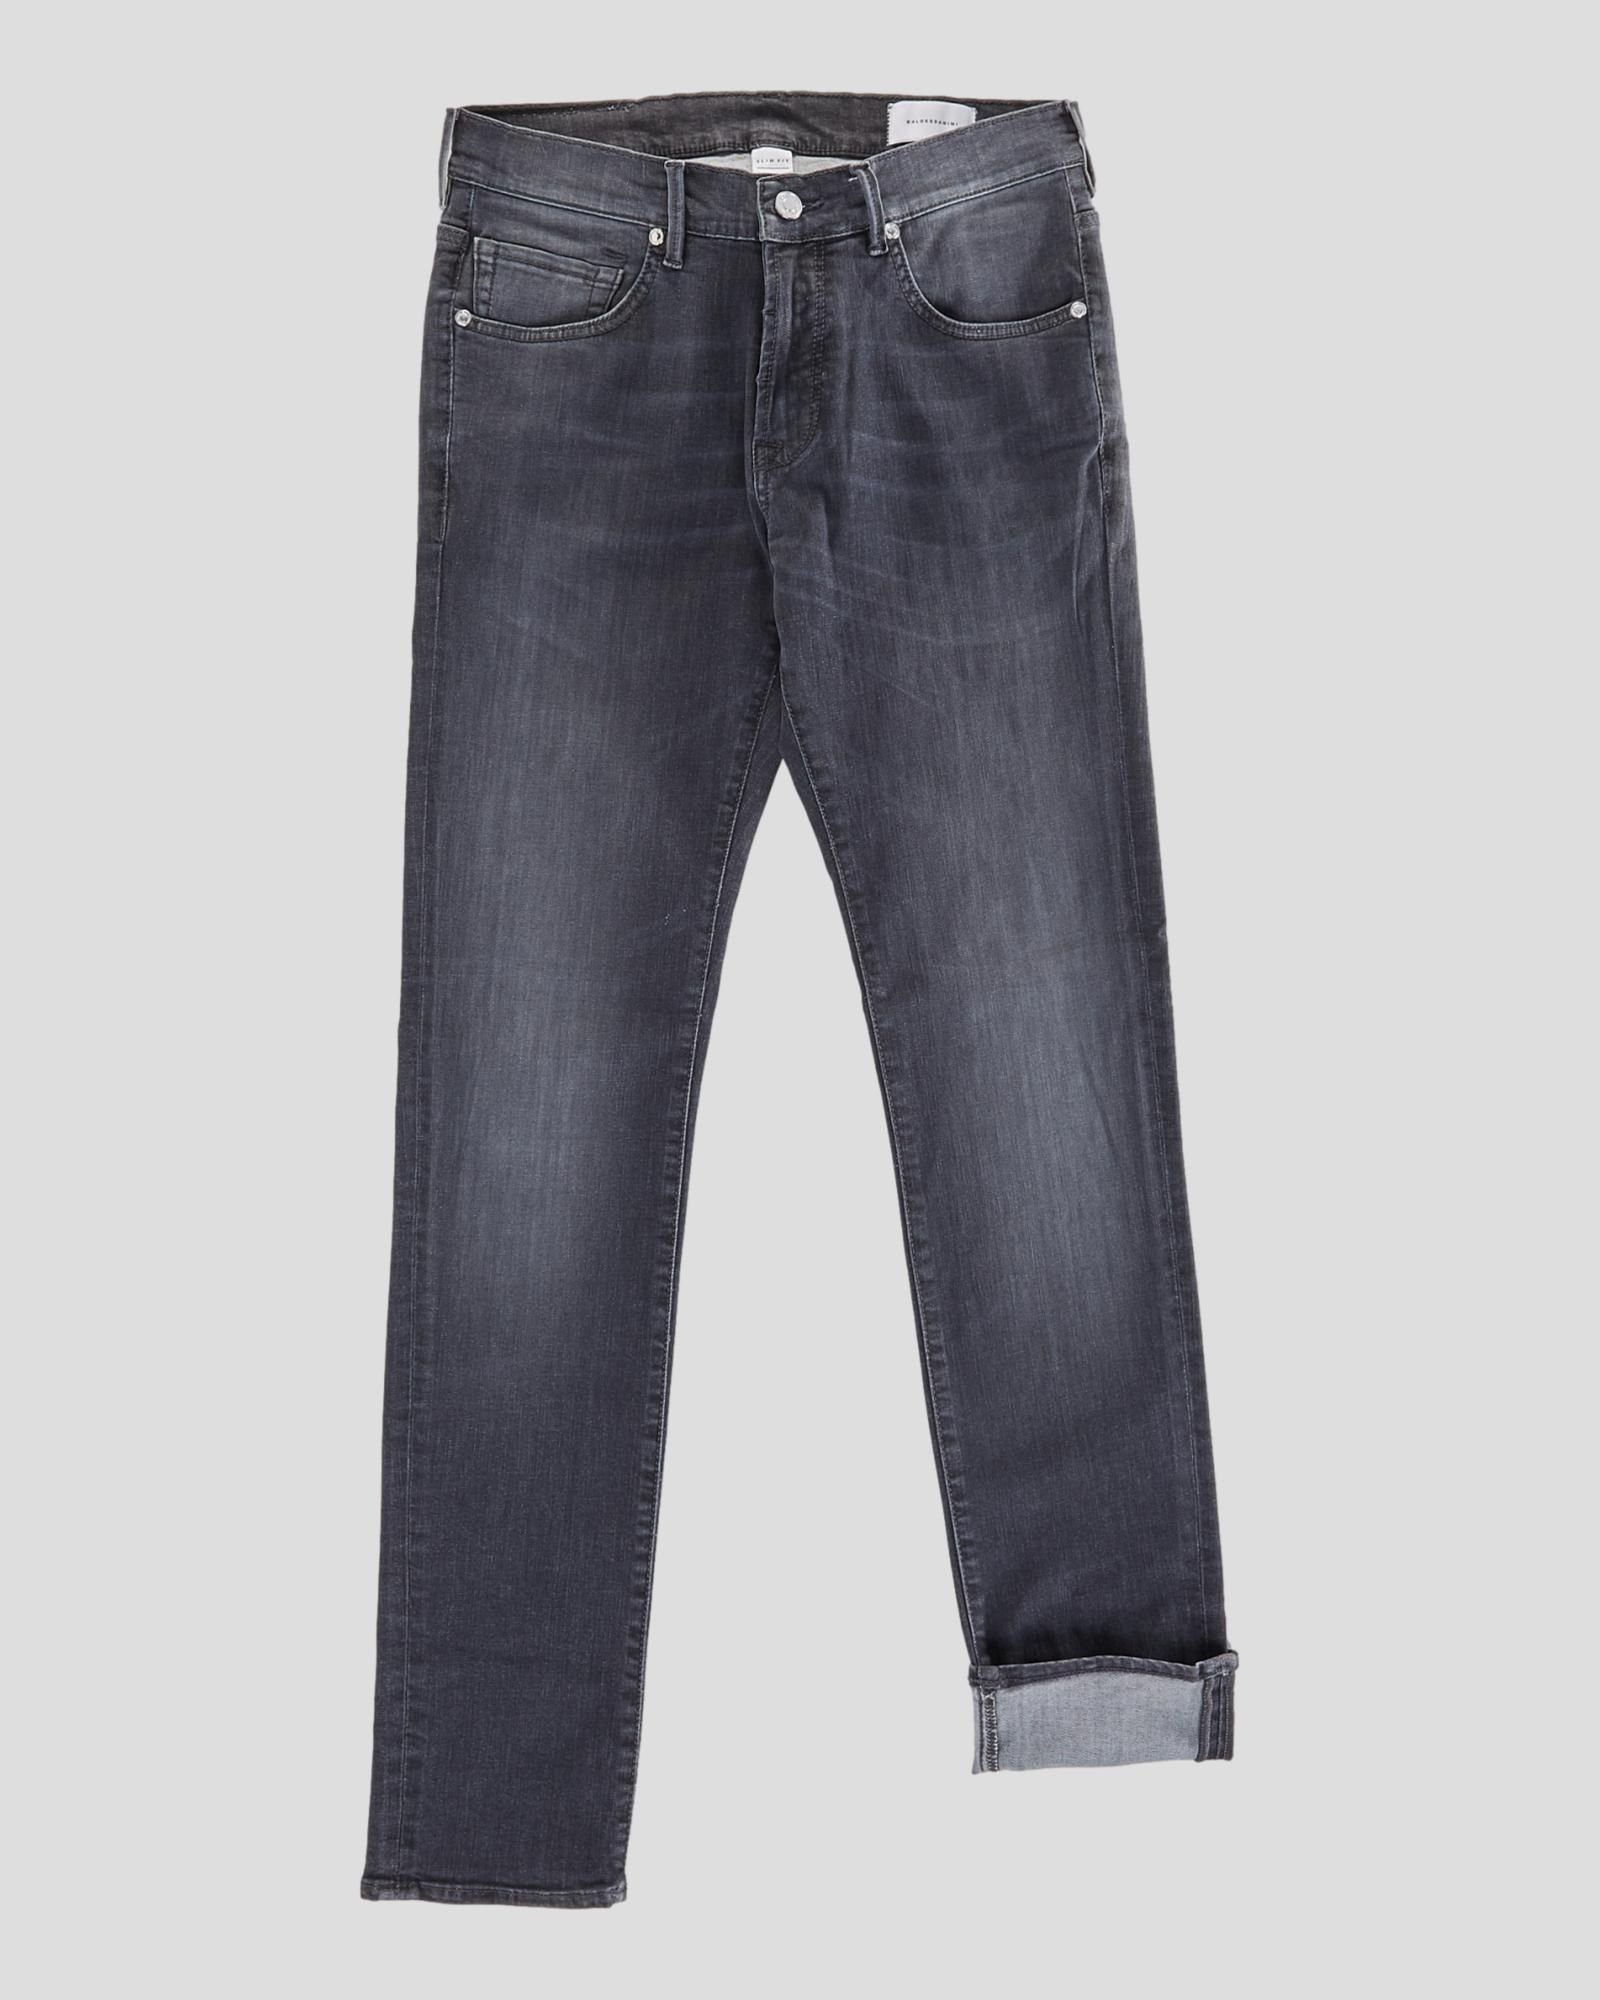 5-Pocket-Jeans BALDESSARINI